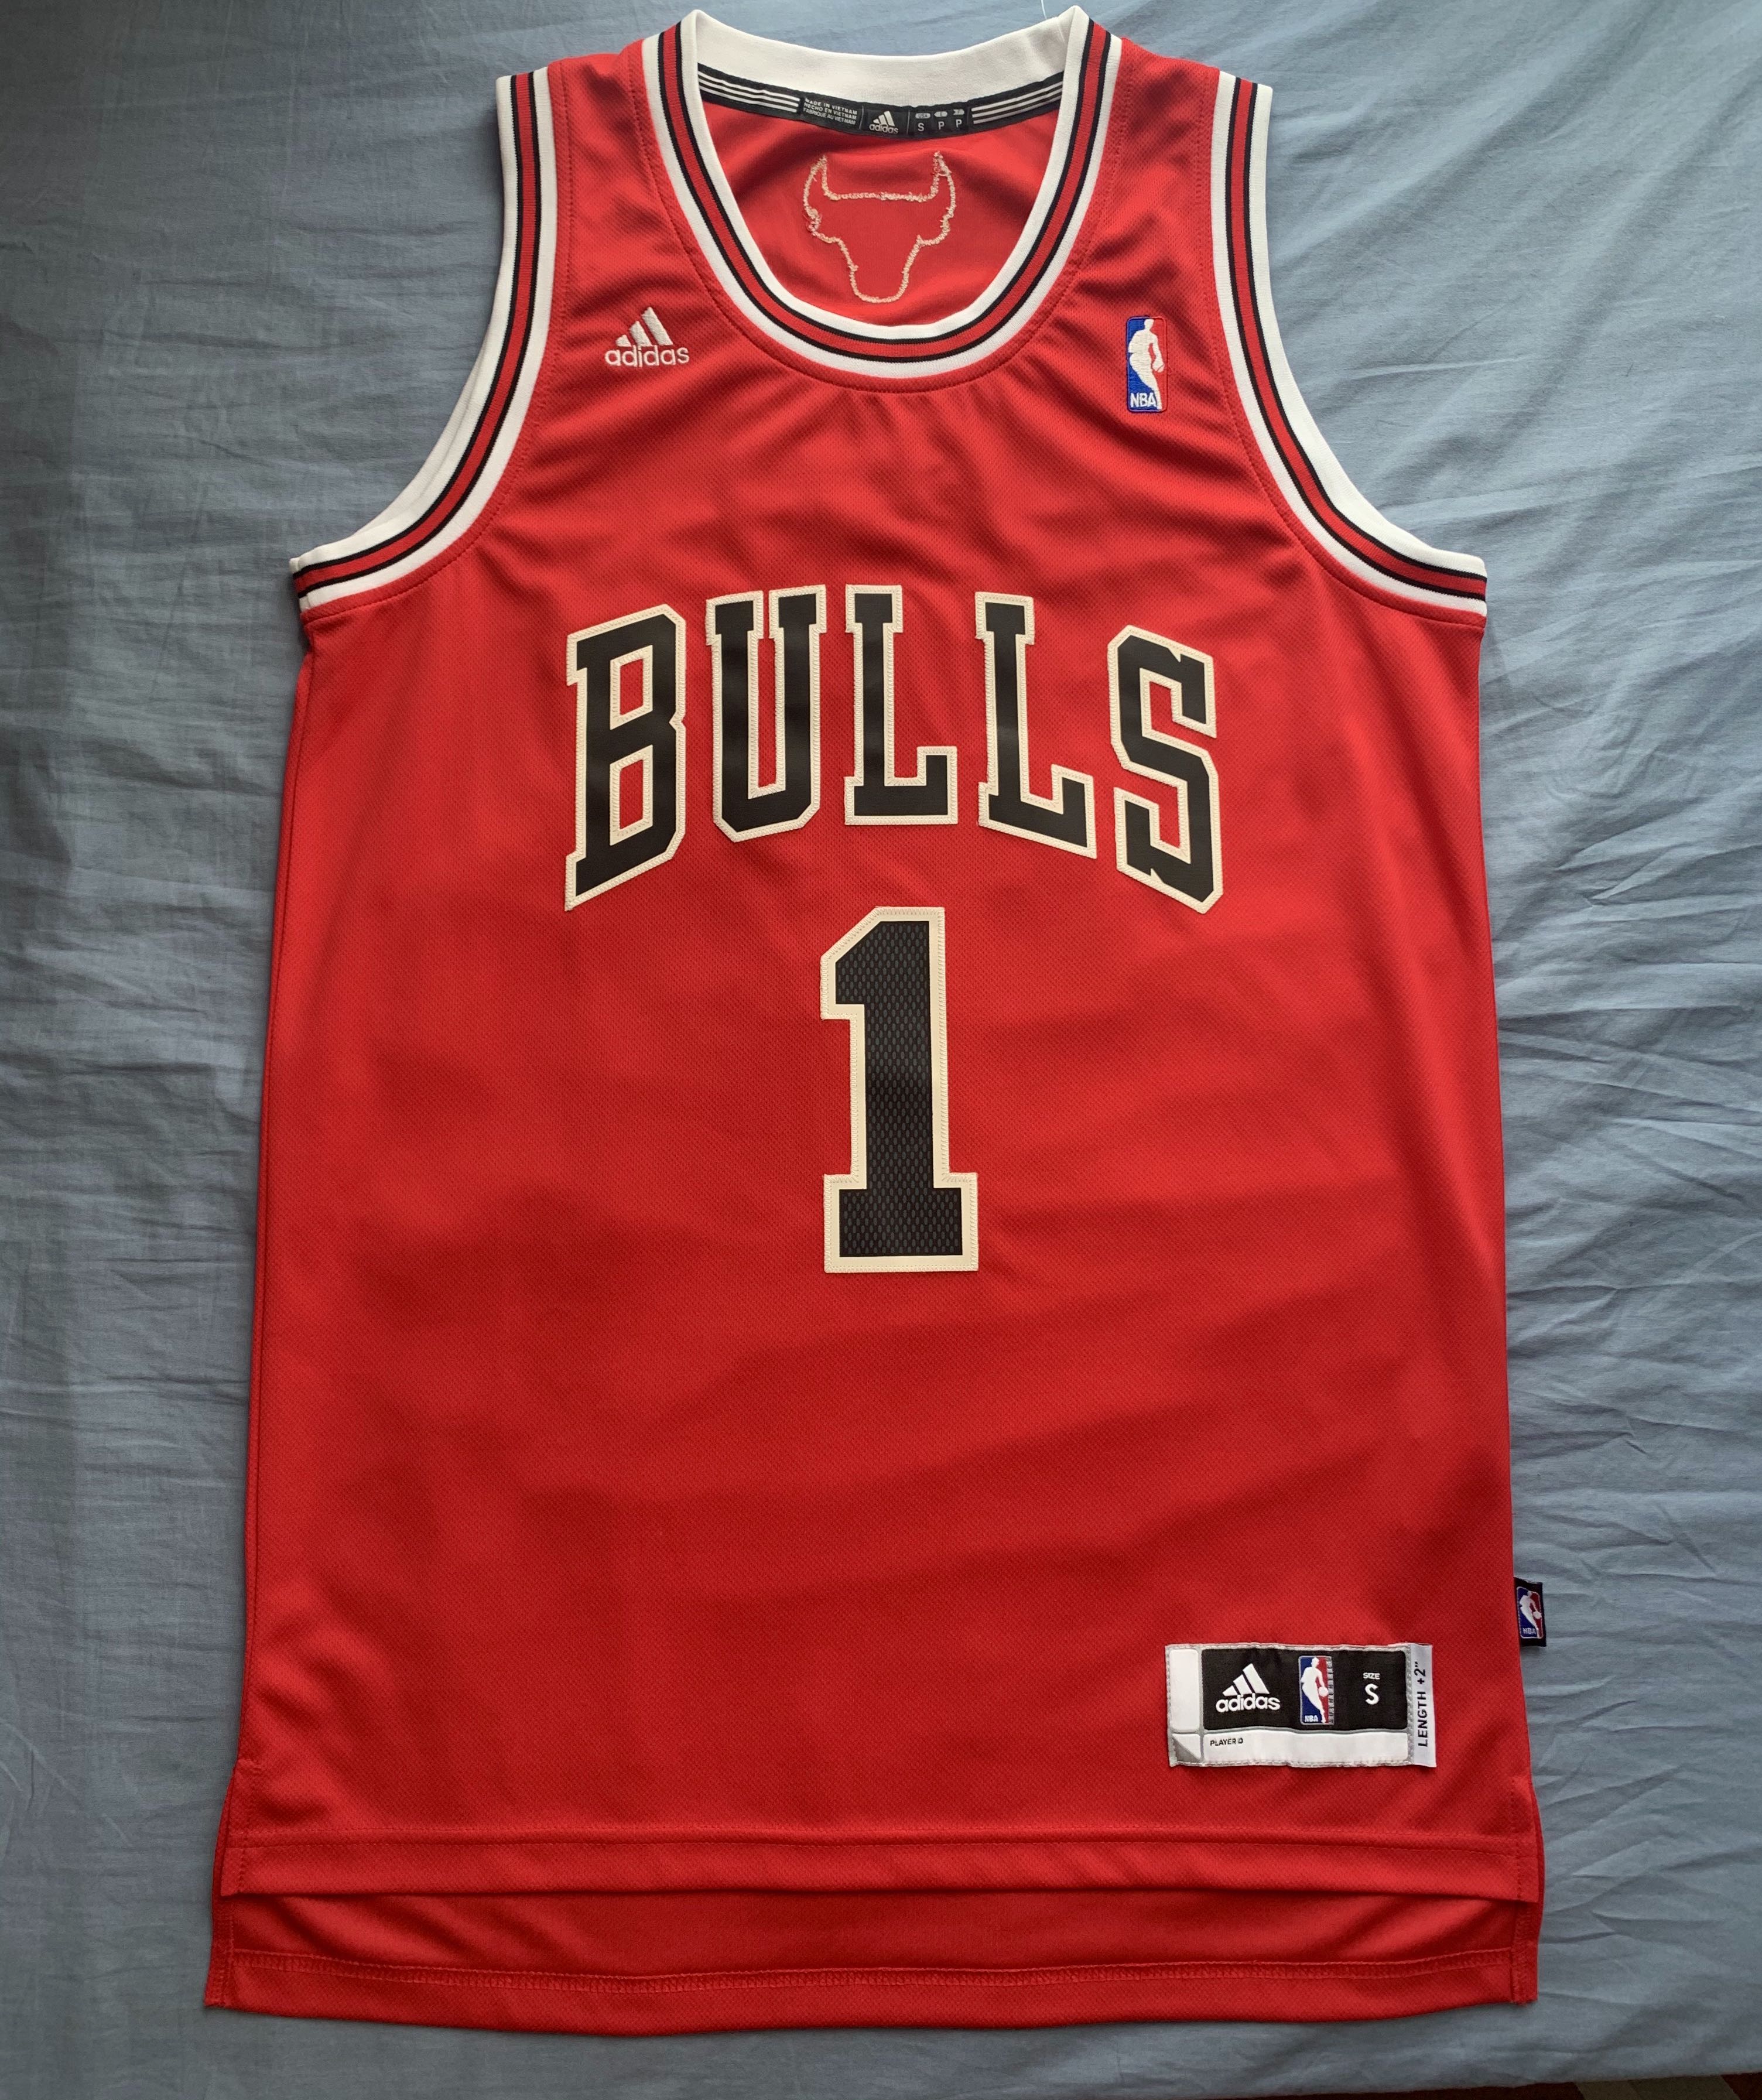 Chicago Bulls Derrick Rose Jersey Adidas Authentic NBA Sz M 